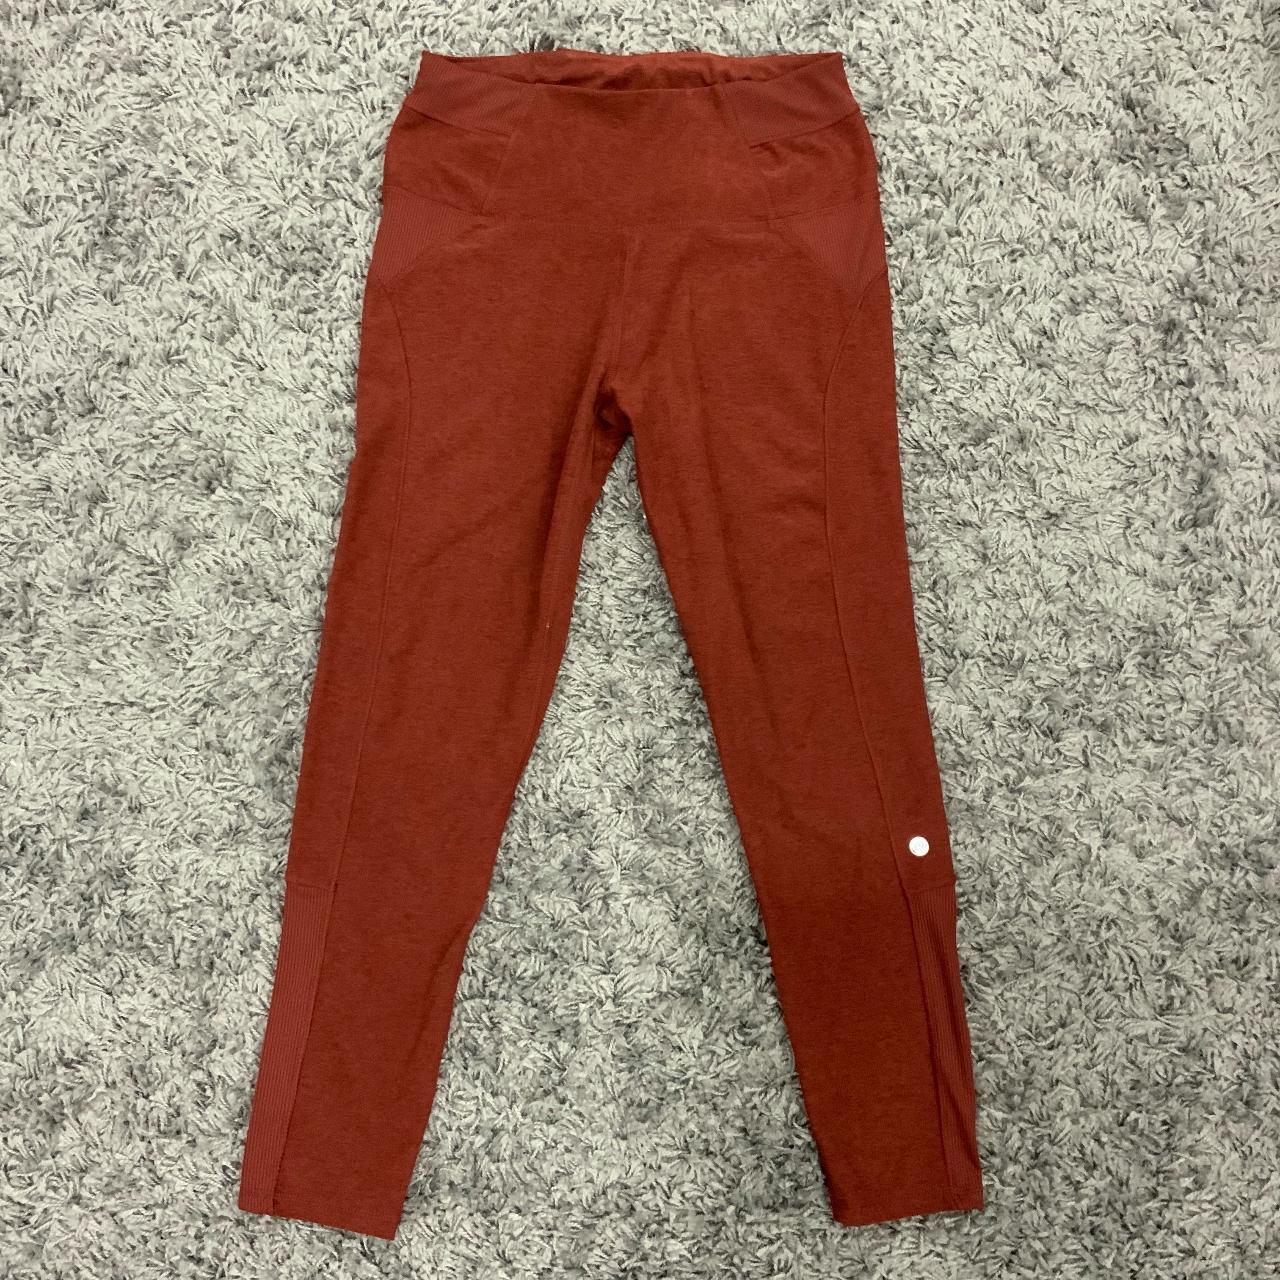 Apana small red yoga pants - Depop